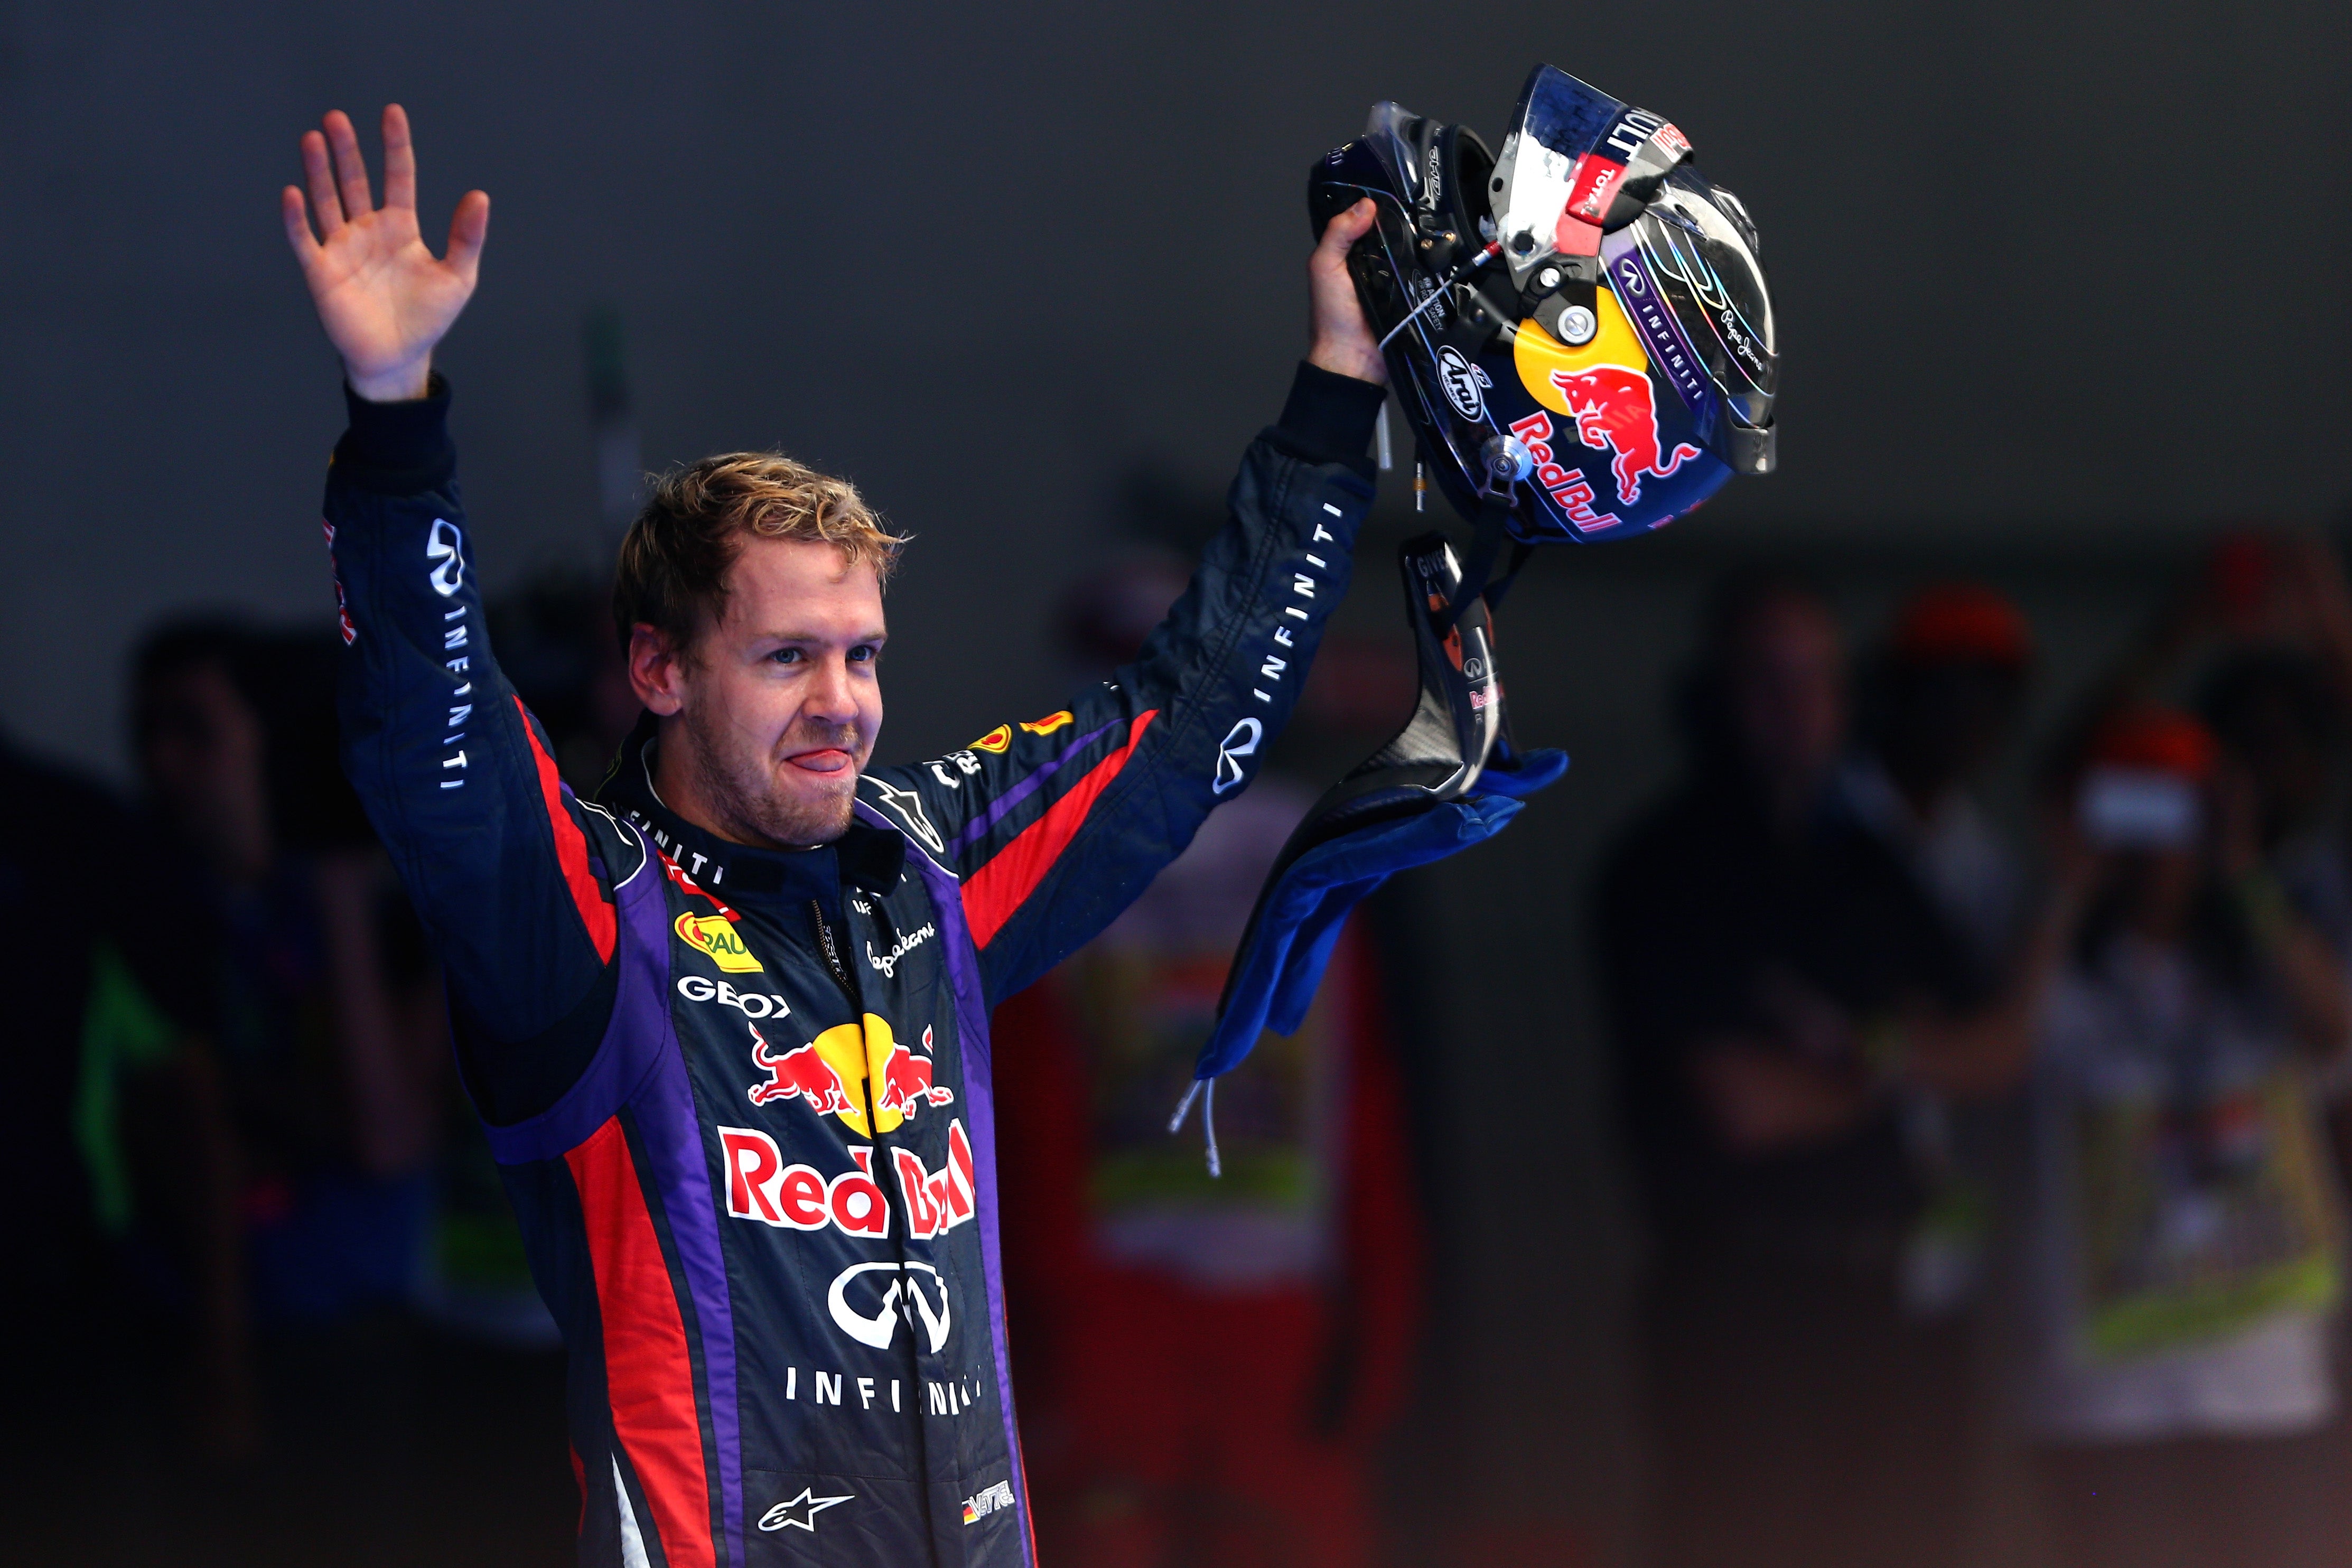 Sebastian Vettel secured his fourth world title in 2013